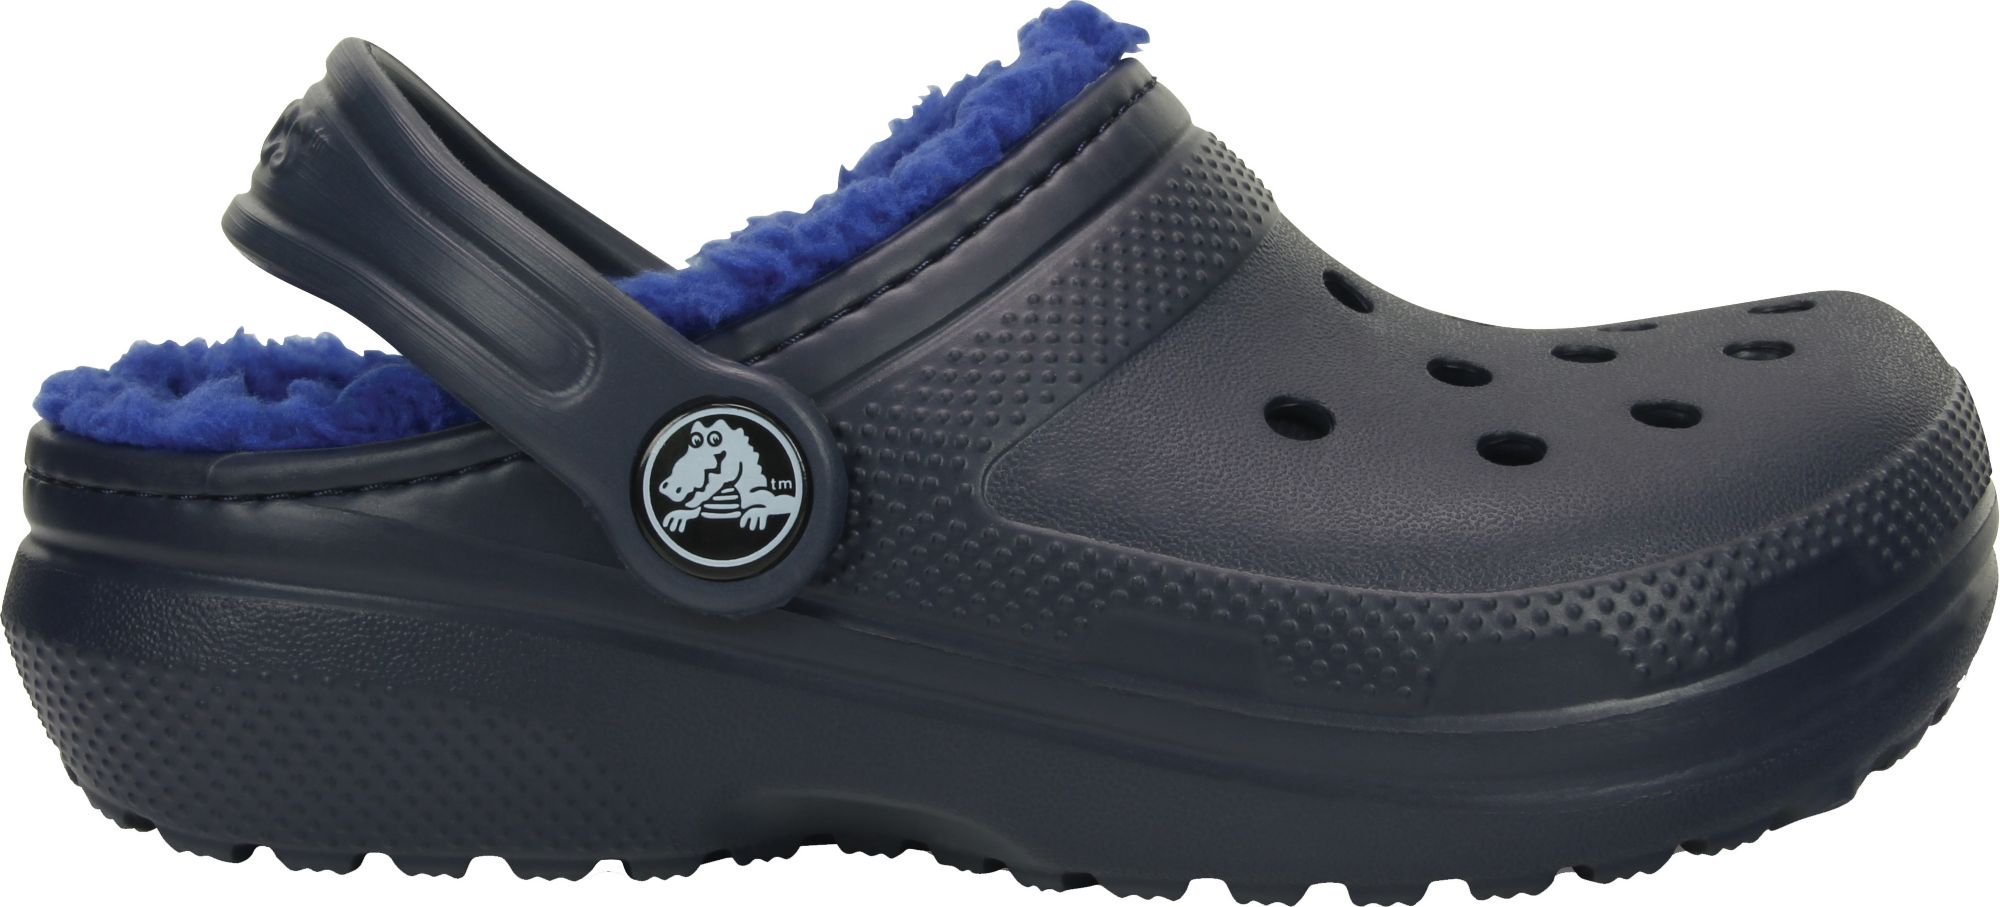 Kids' Slides & Sandals | DICK'S Sporting Goods